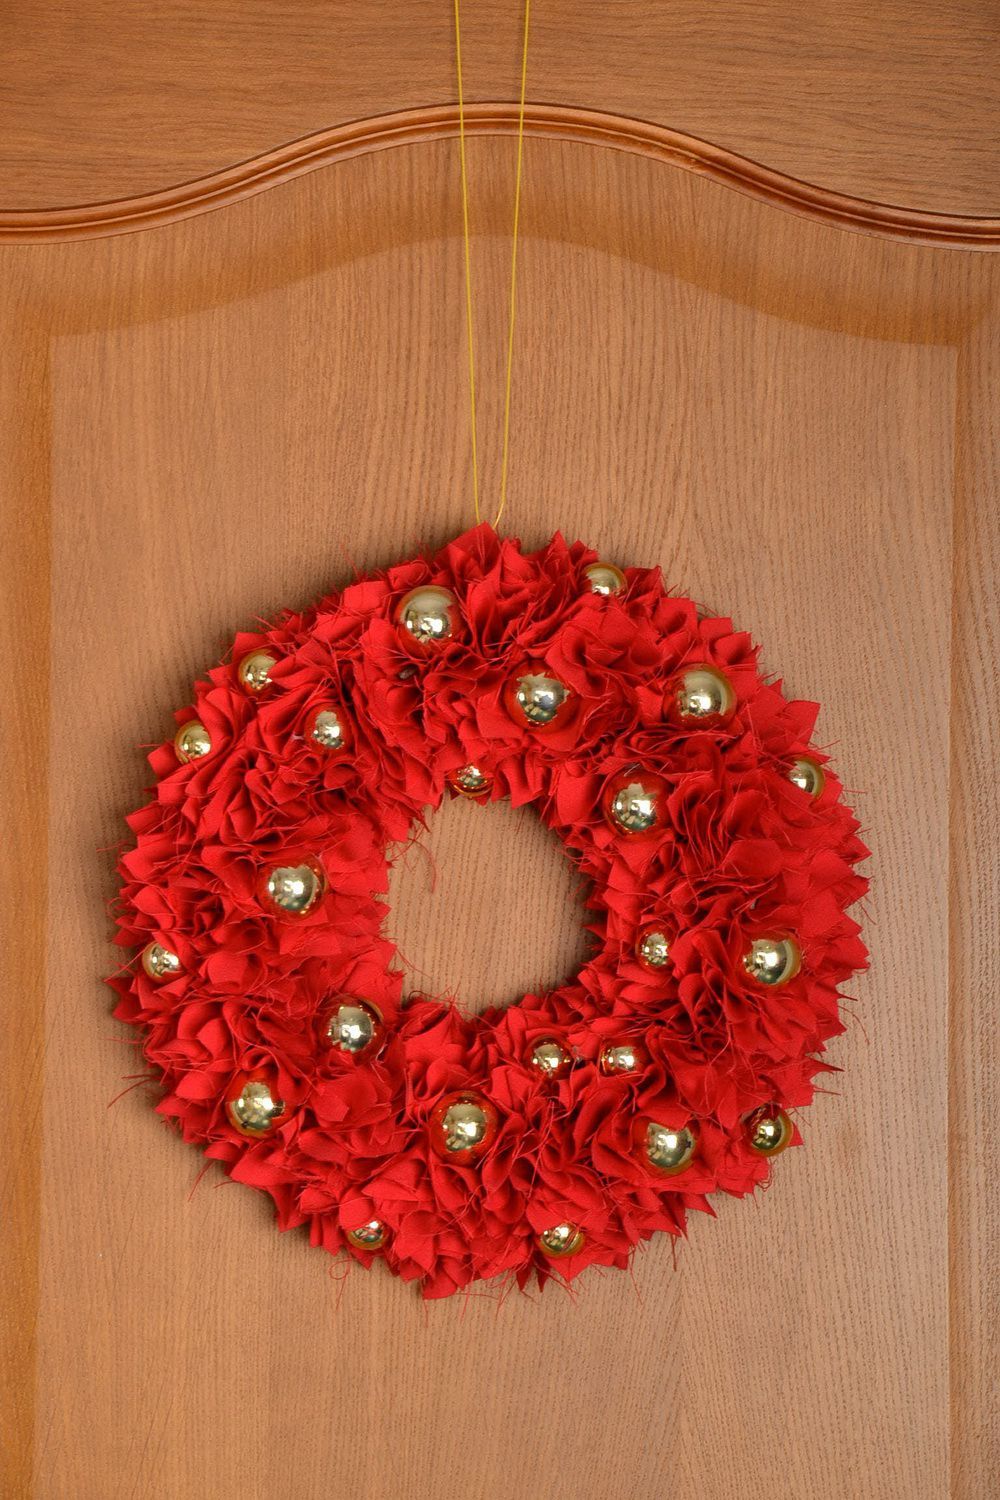 Decorative New Year's wreath on the door photo 4